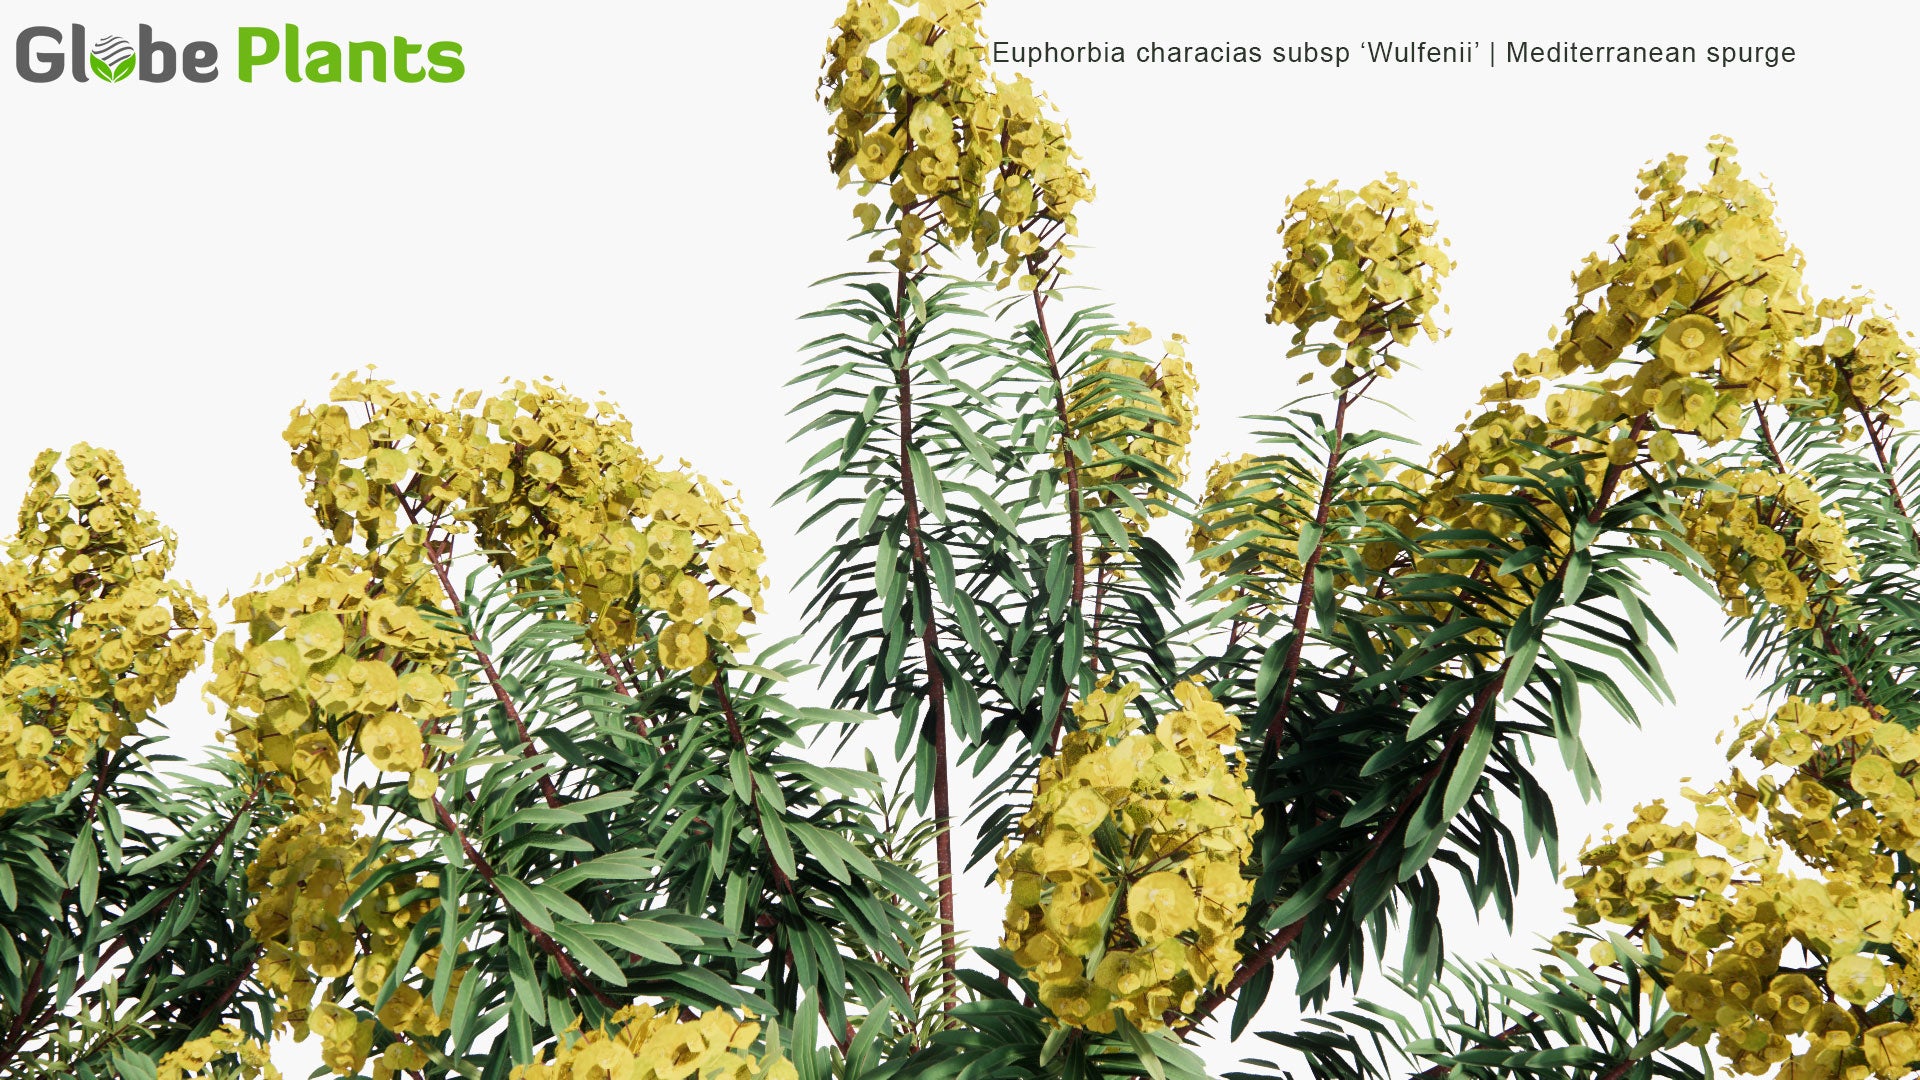 Low Poly Euphorbia Characias Subsp 'Wulfenii' - Mediterranean Spurge (3D Model)